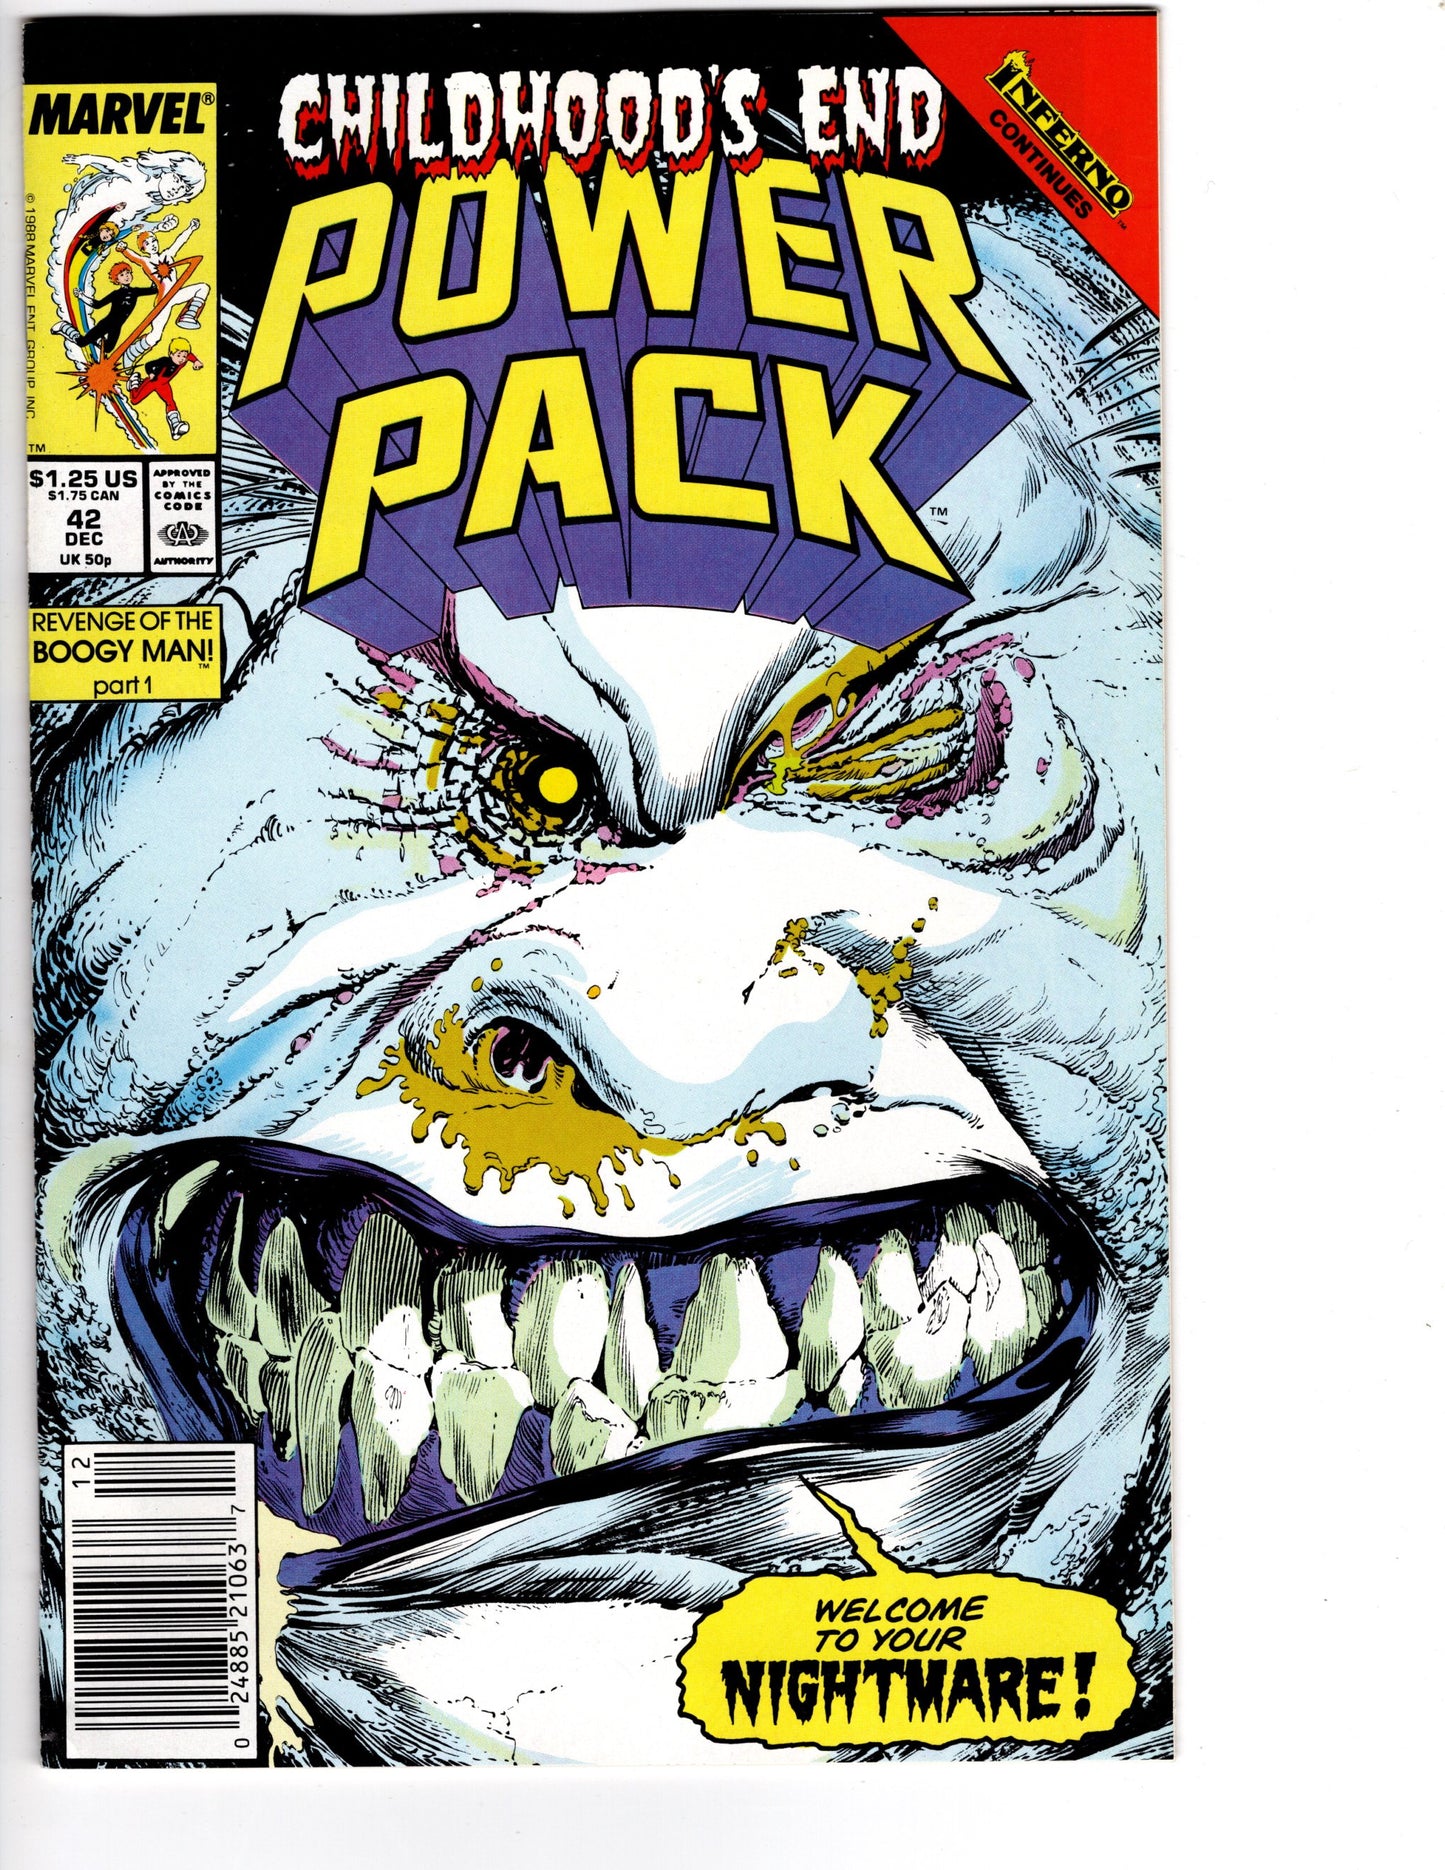 Power Pack #42